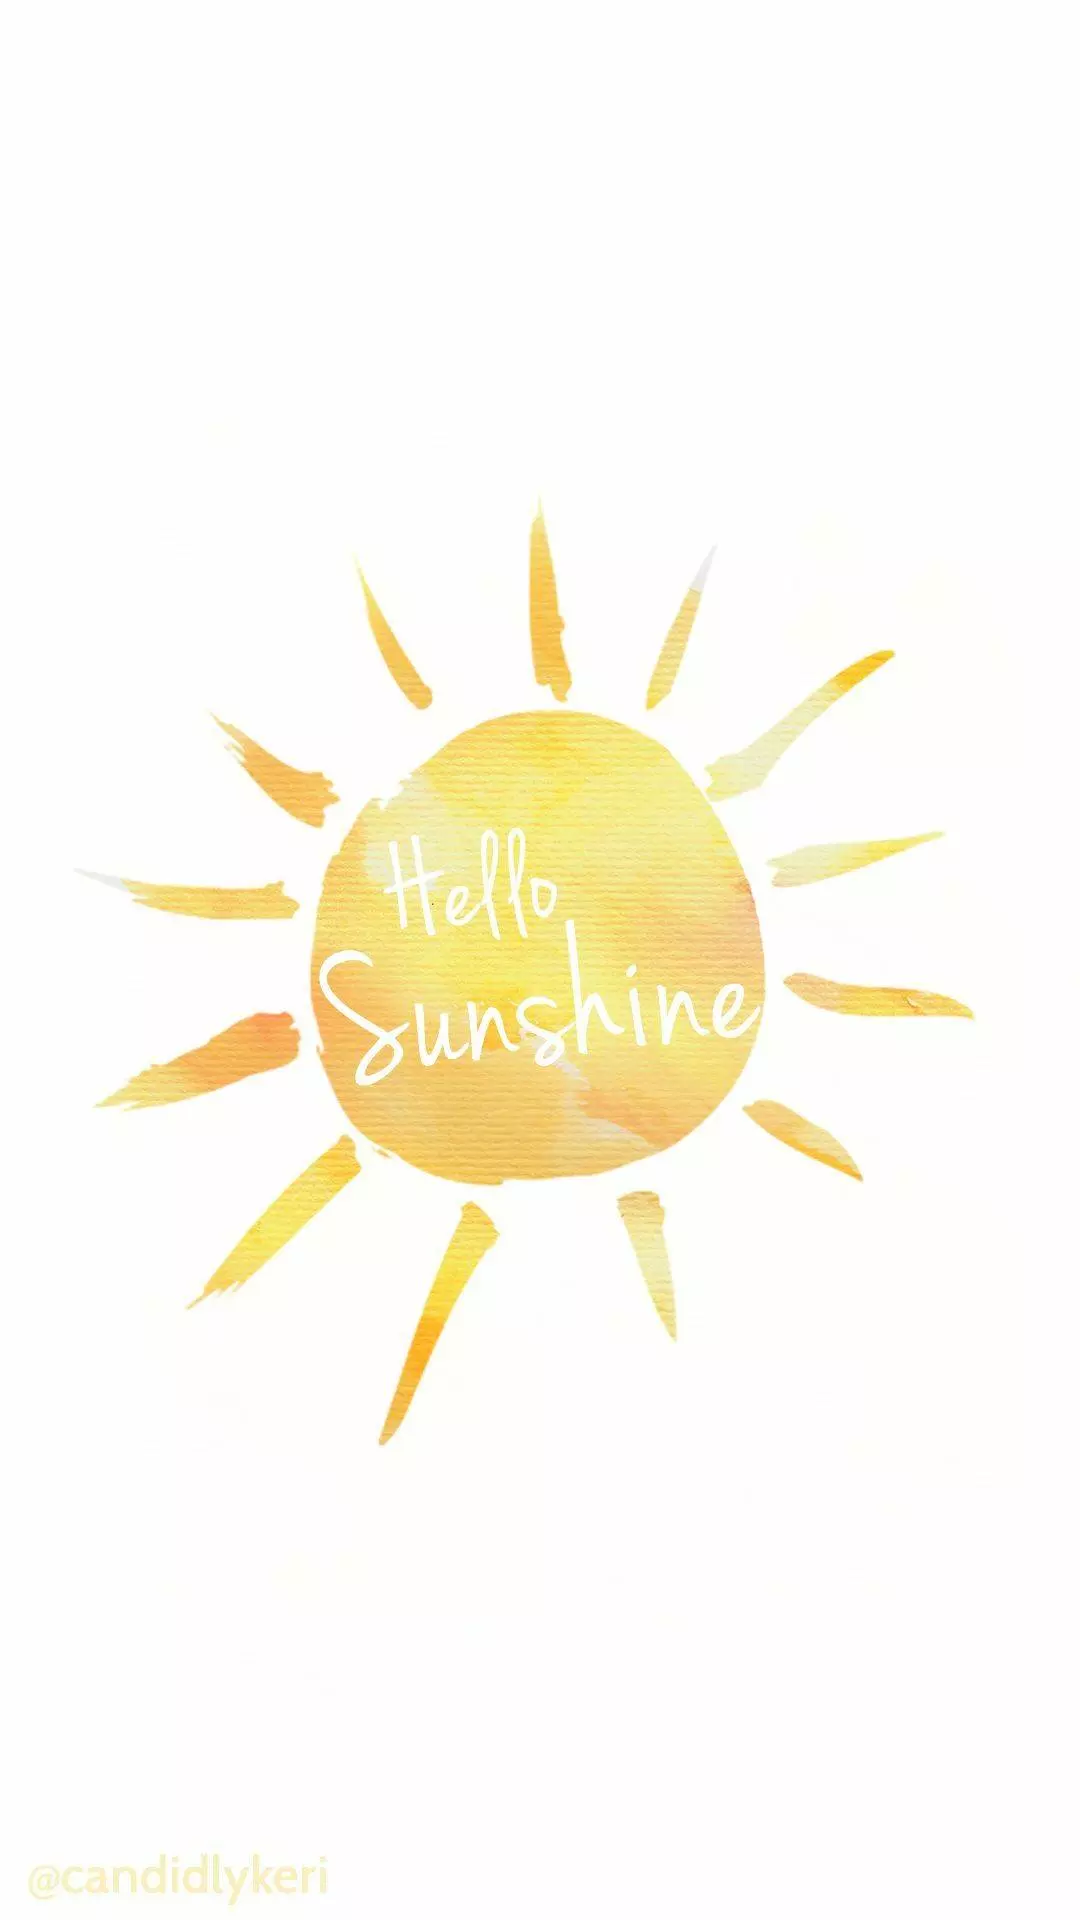 Hello sunshine wallpaper for your phone or desktop background. - Sun